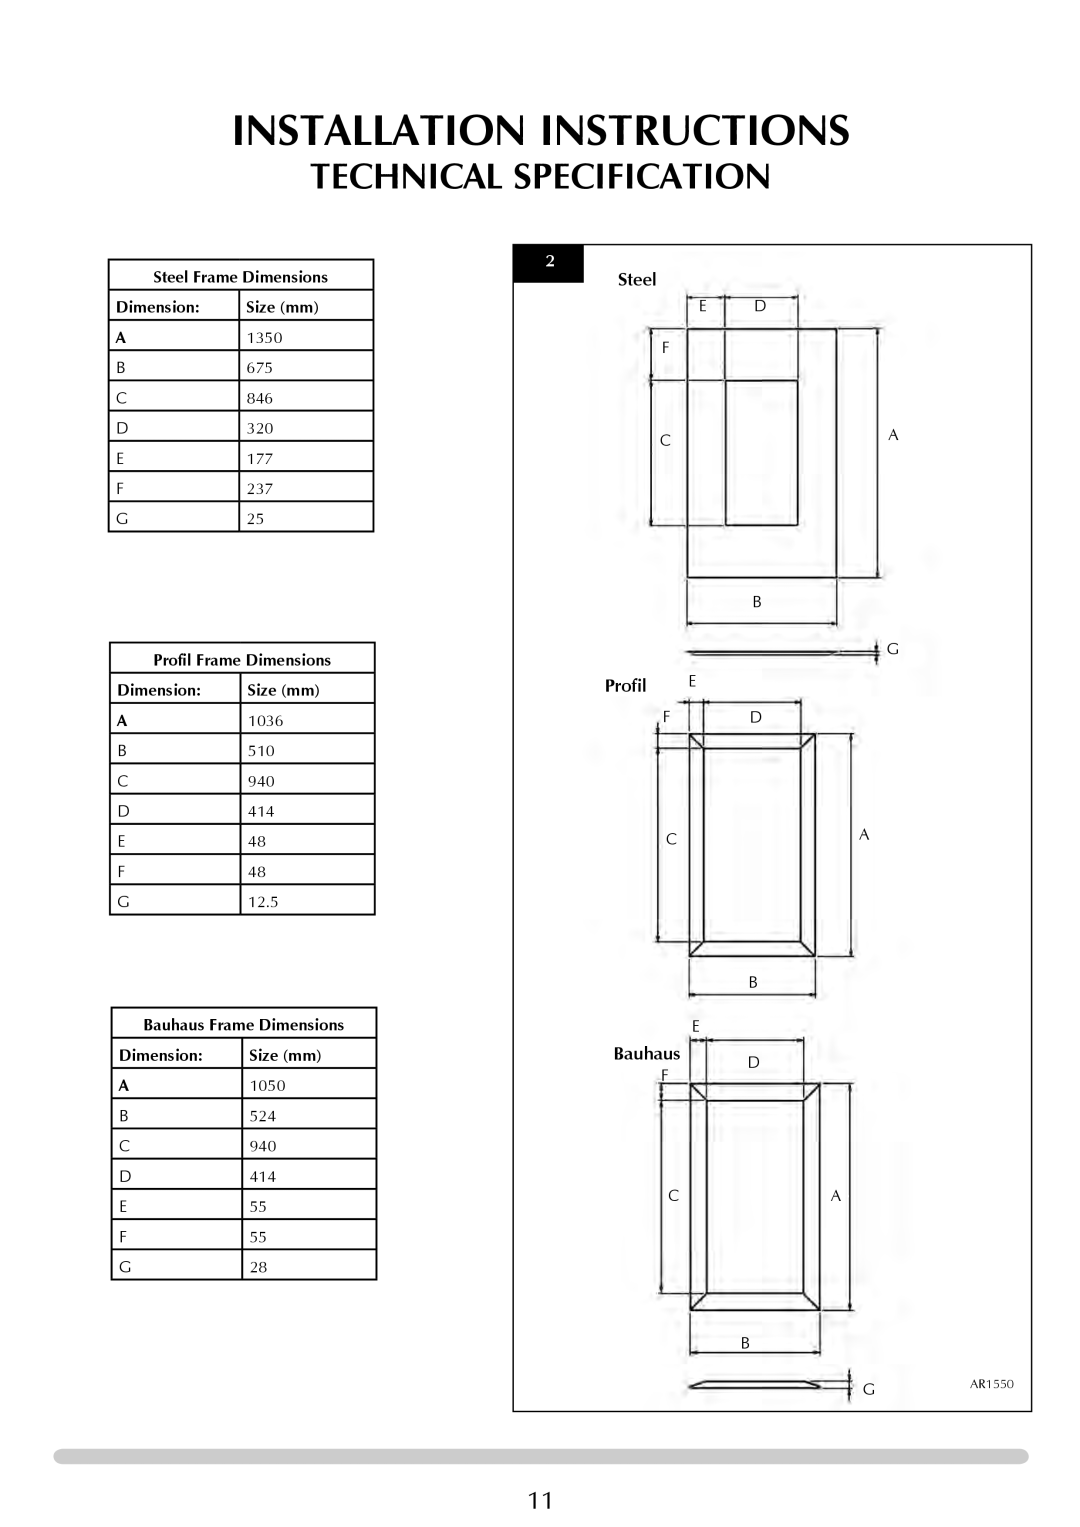 Stovax Studio 22 manual Installation Instructions, Technical Specification, Steel, Profil E, Bauhaus 